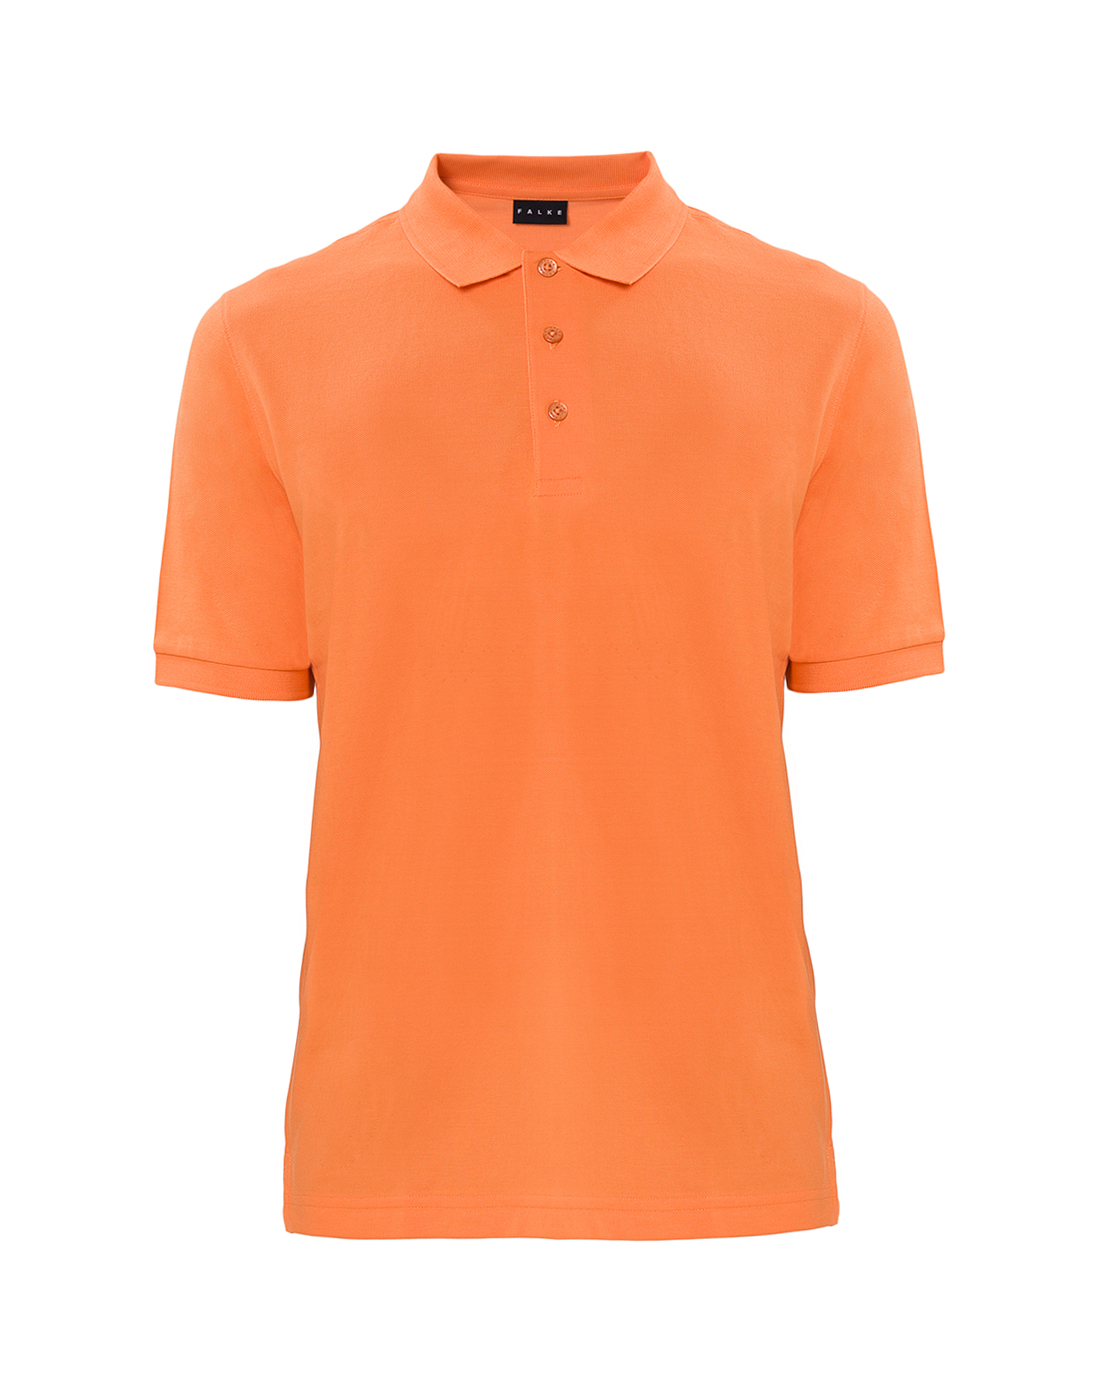 Поло оранжевое мужское Falke Fashion S62101/8150-1